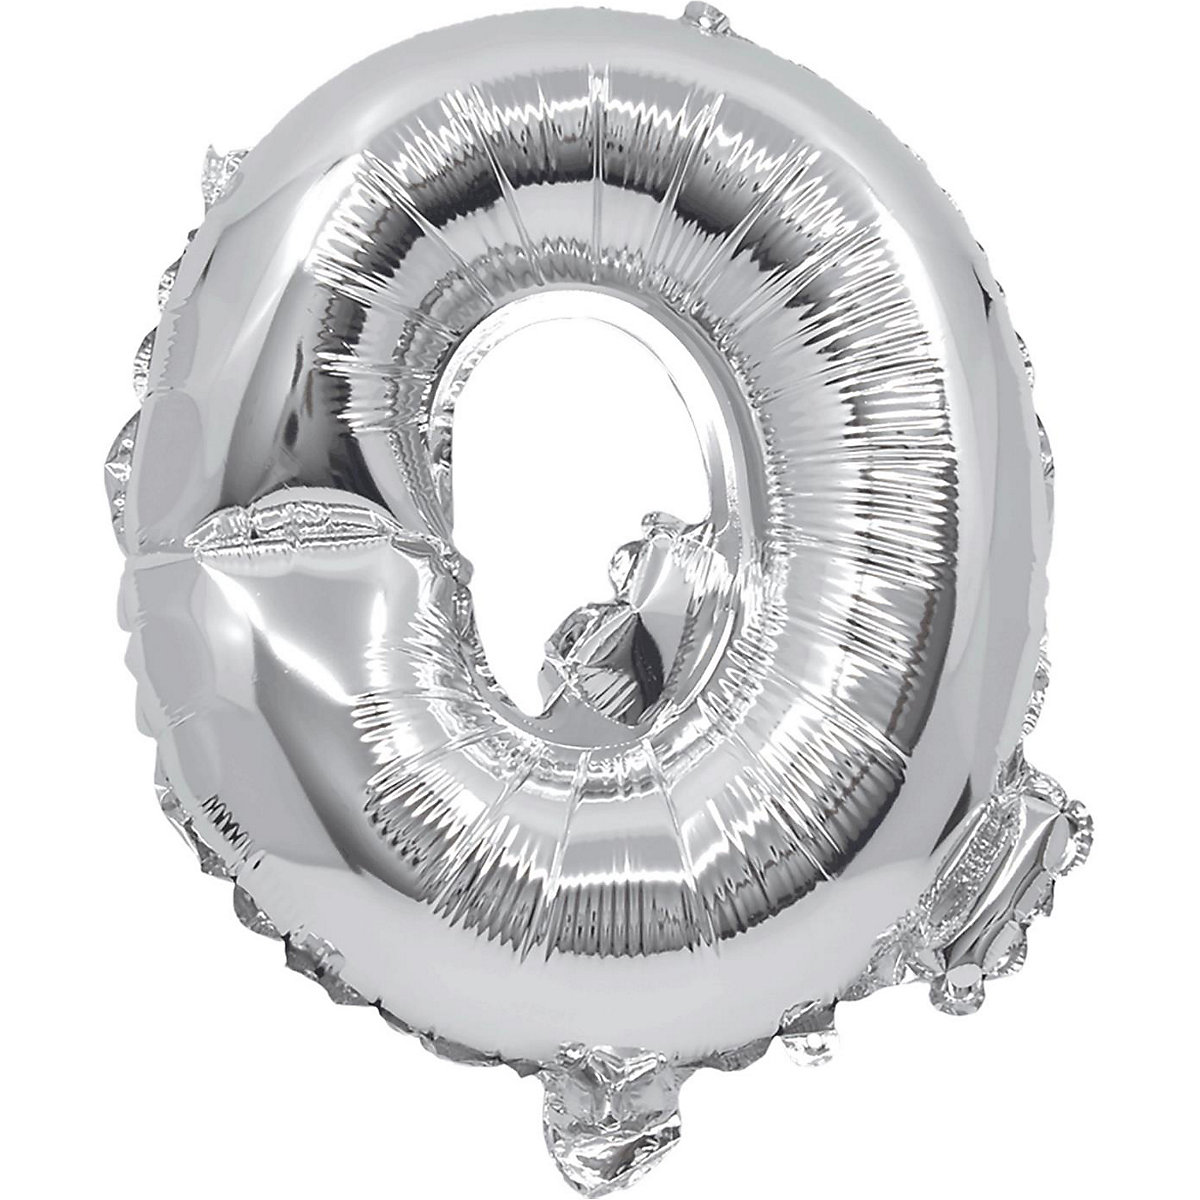 Procos Folienballon Buchstabe Q silber 32 cm inkl. Pustehalm